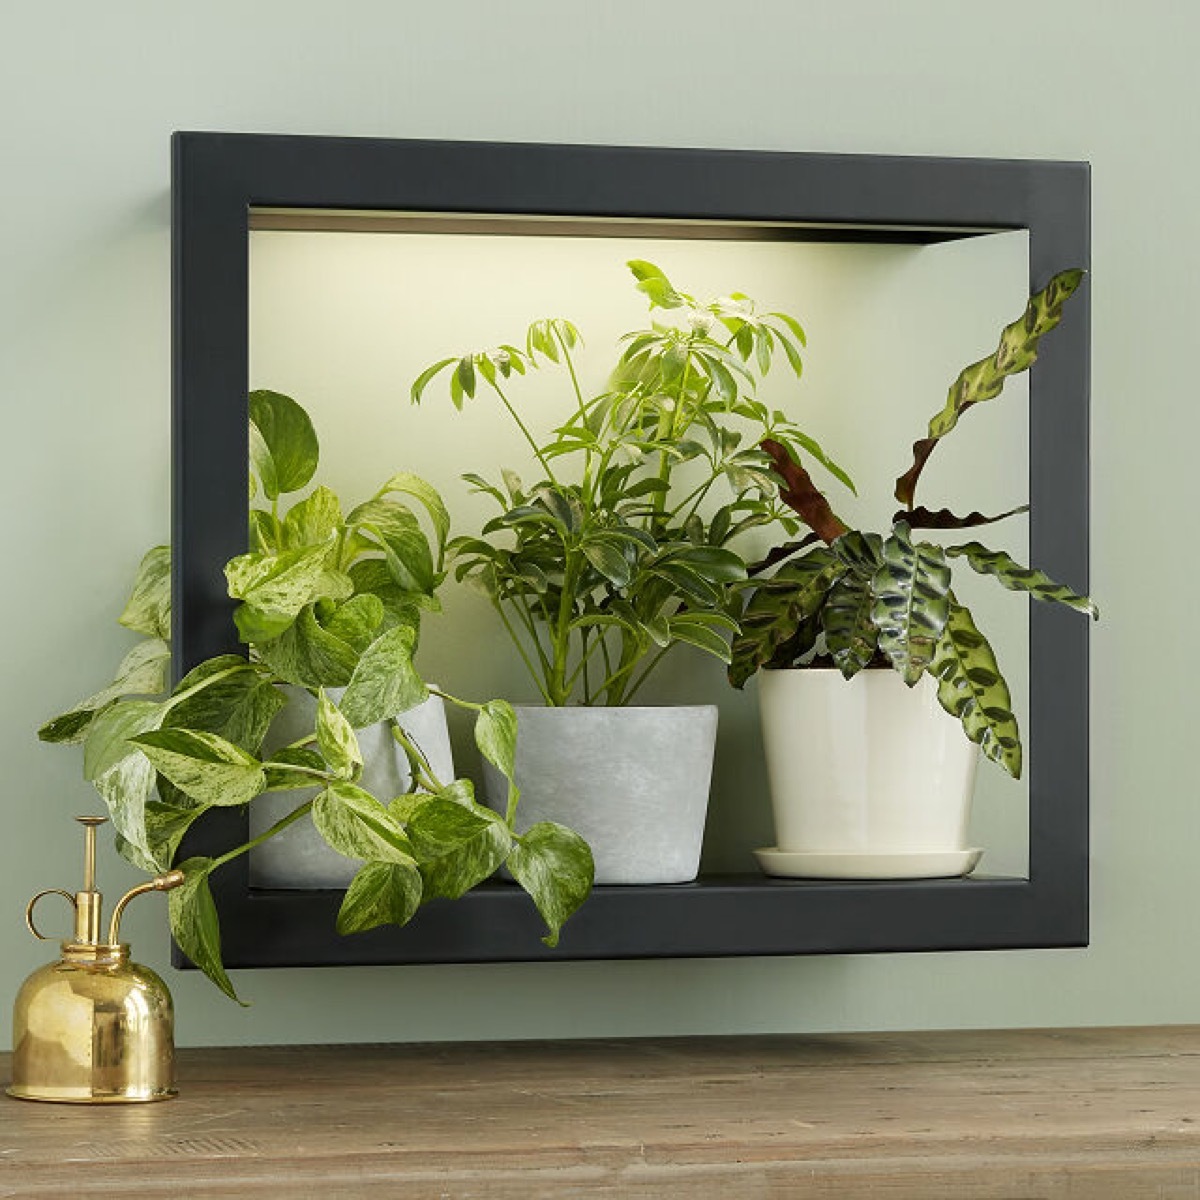 Plants in a modern grow frame